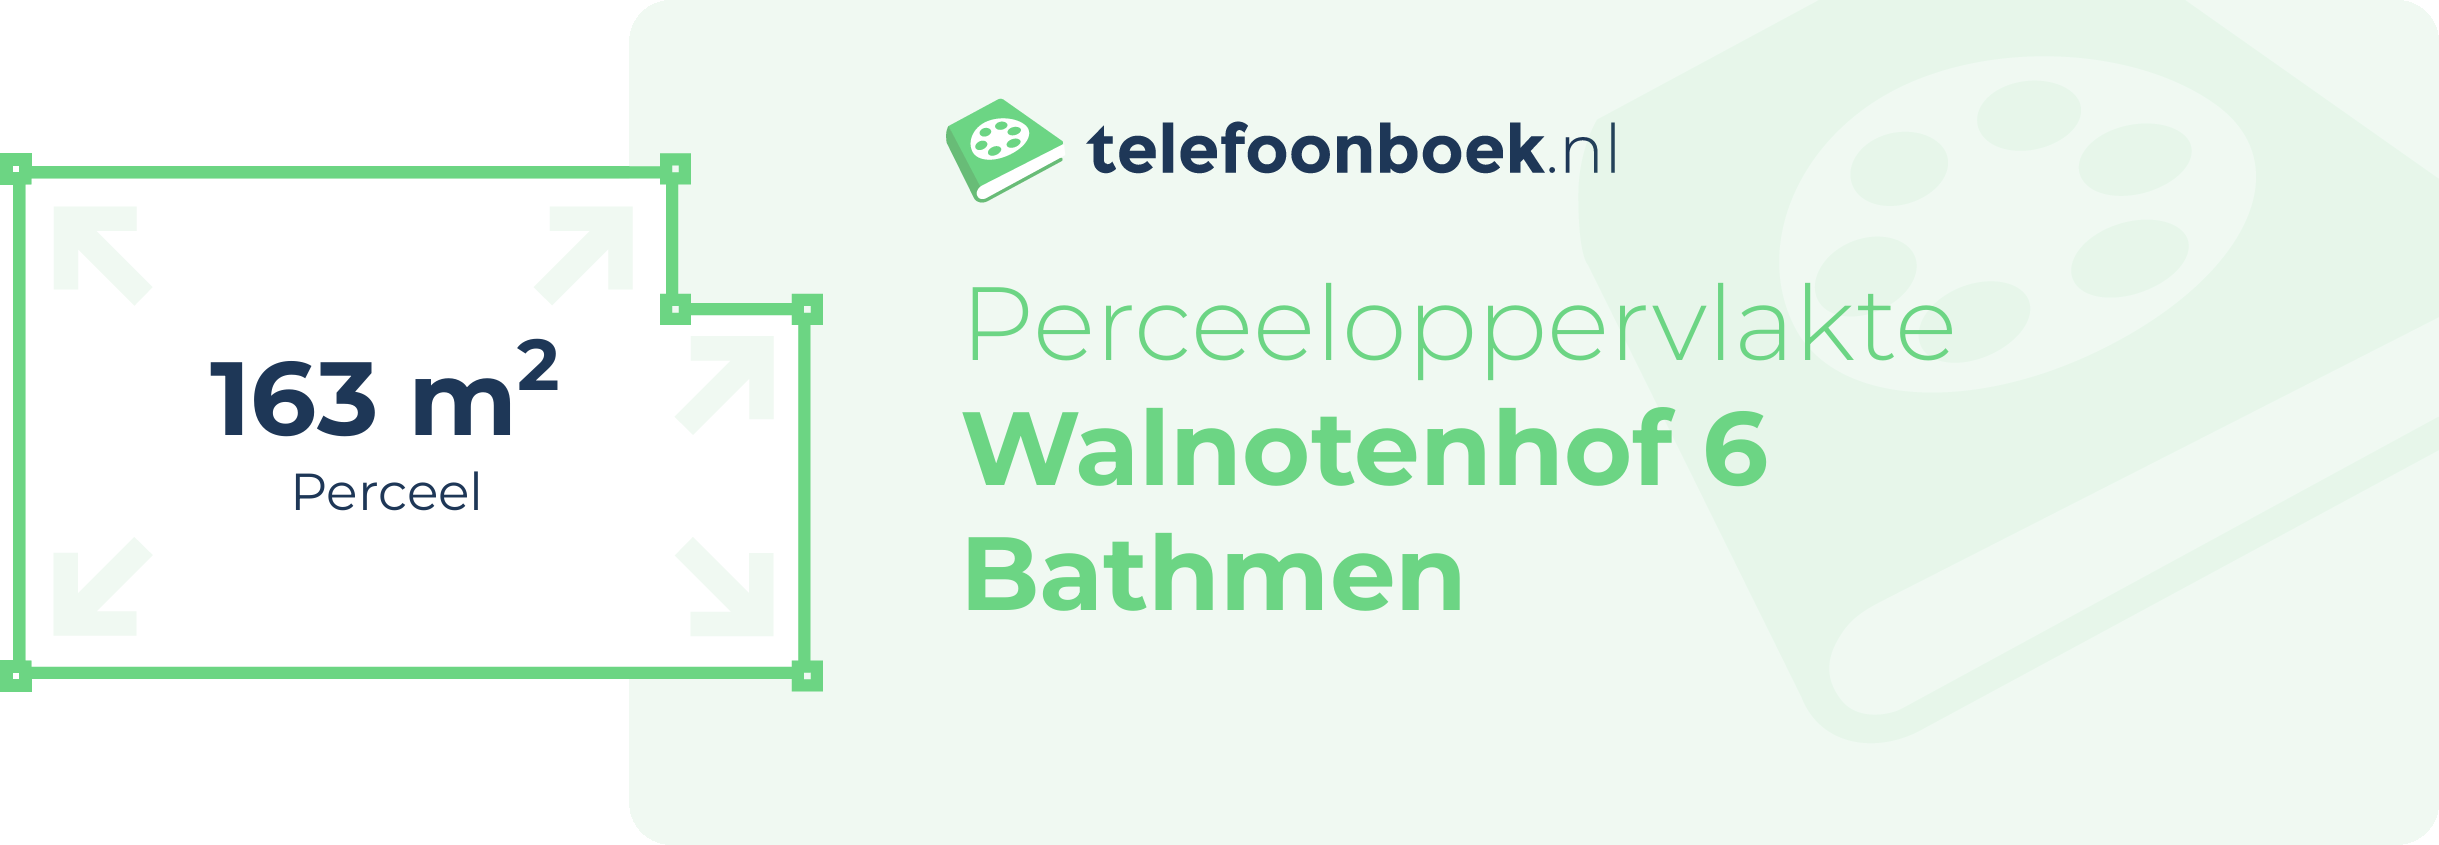 Perceeloppervlakte Walnotenhof 6 Bathmen